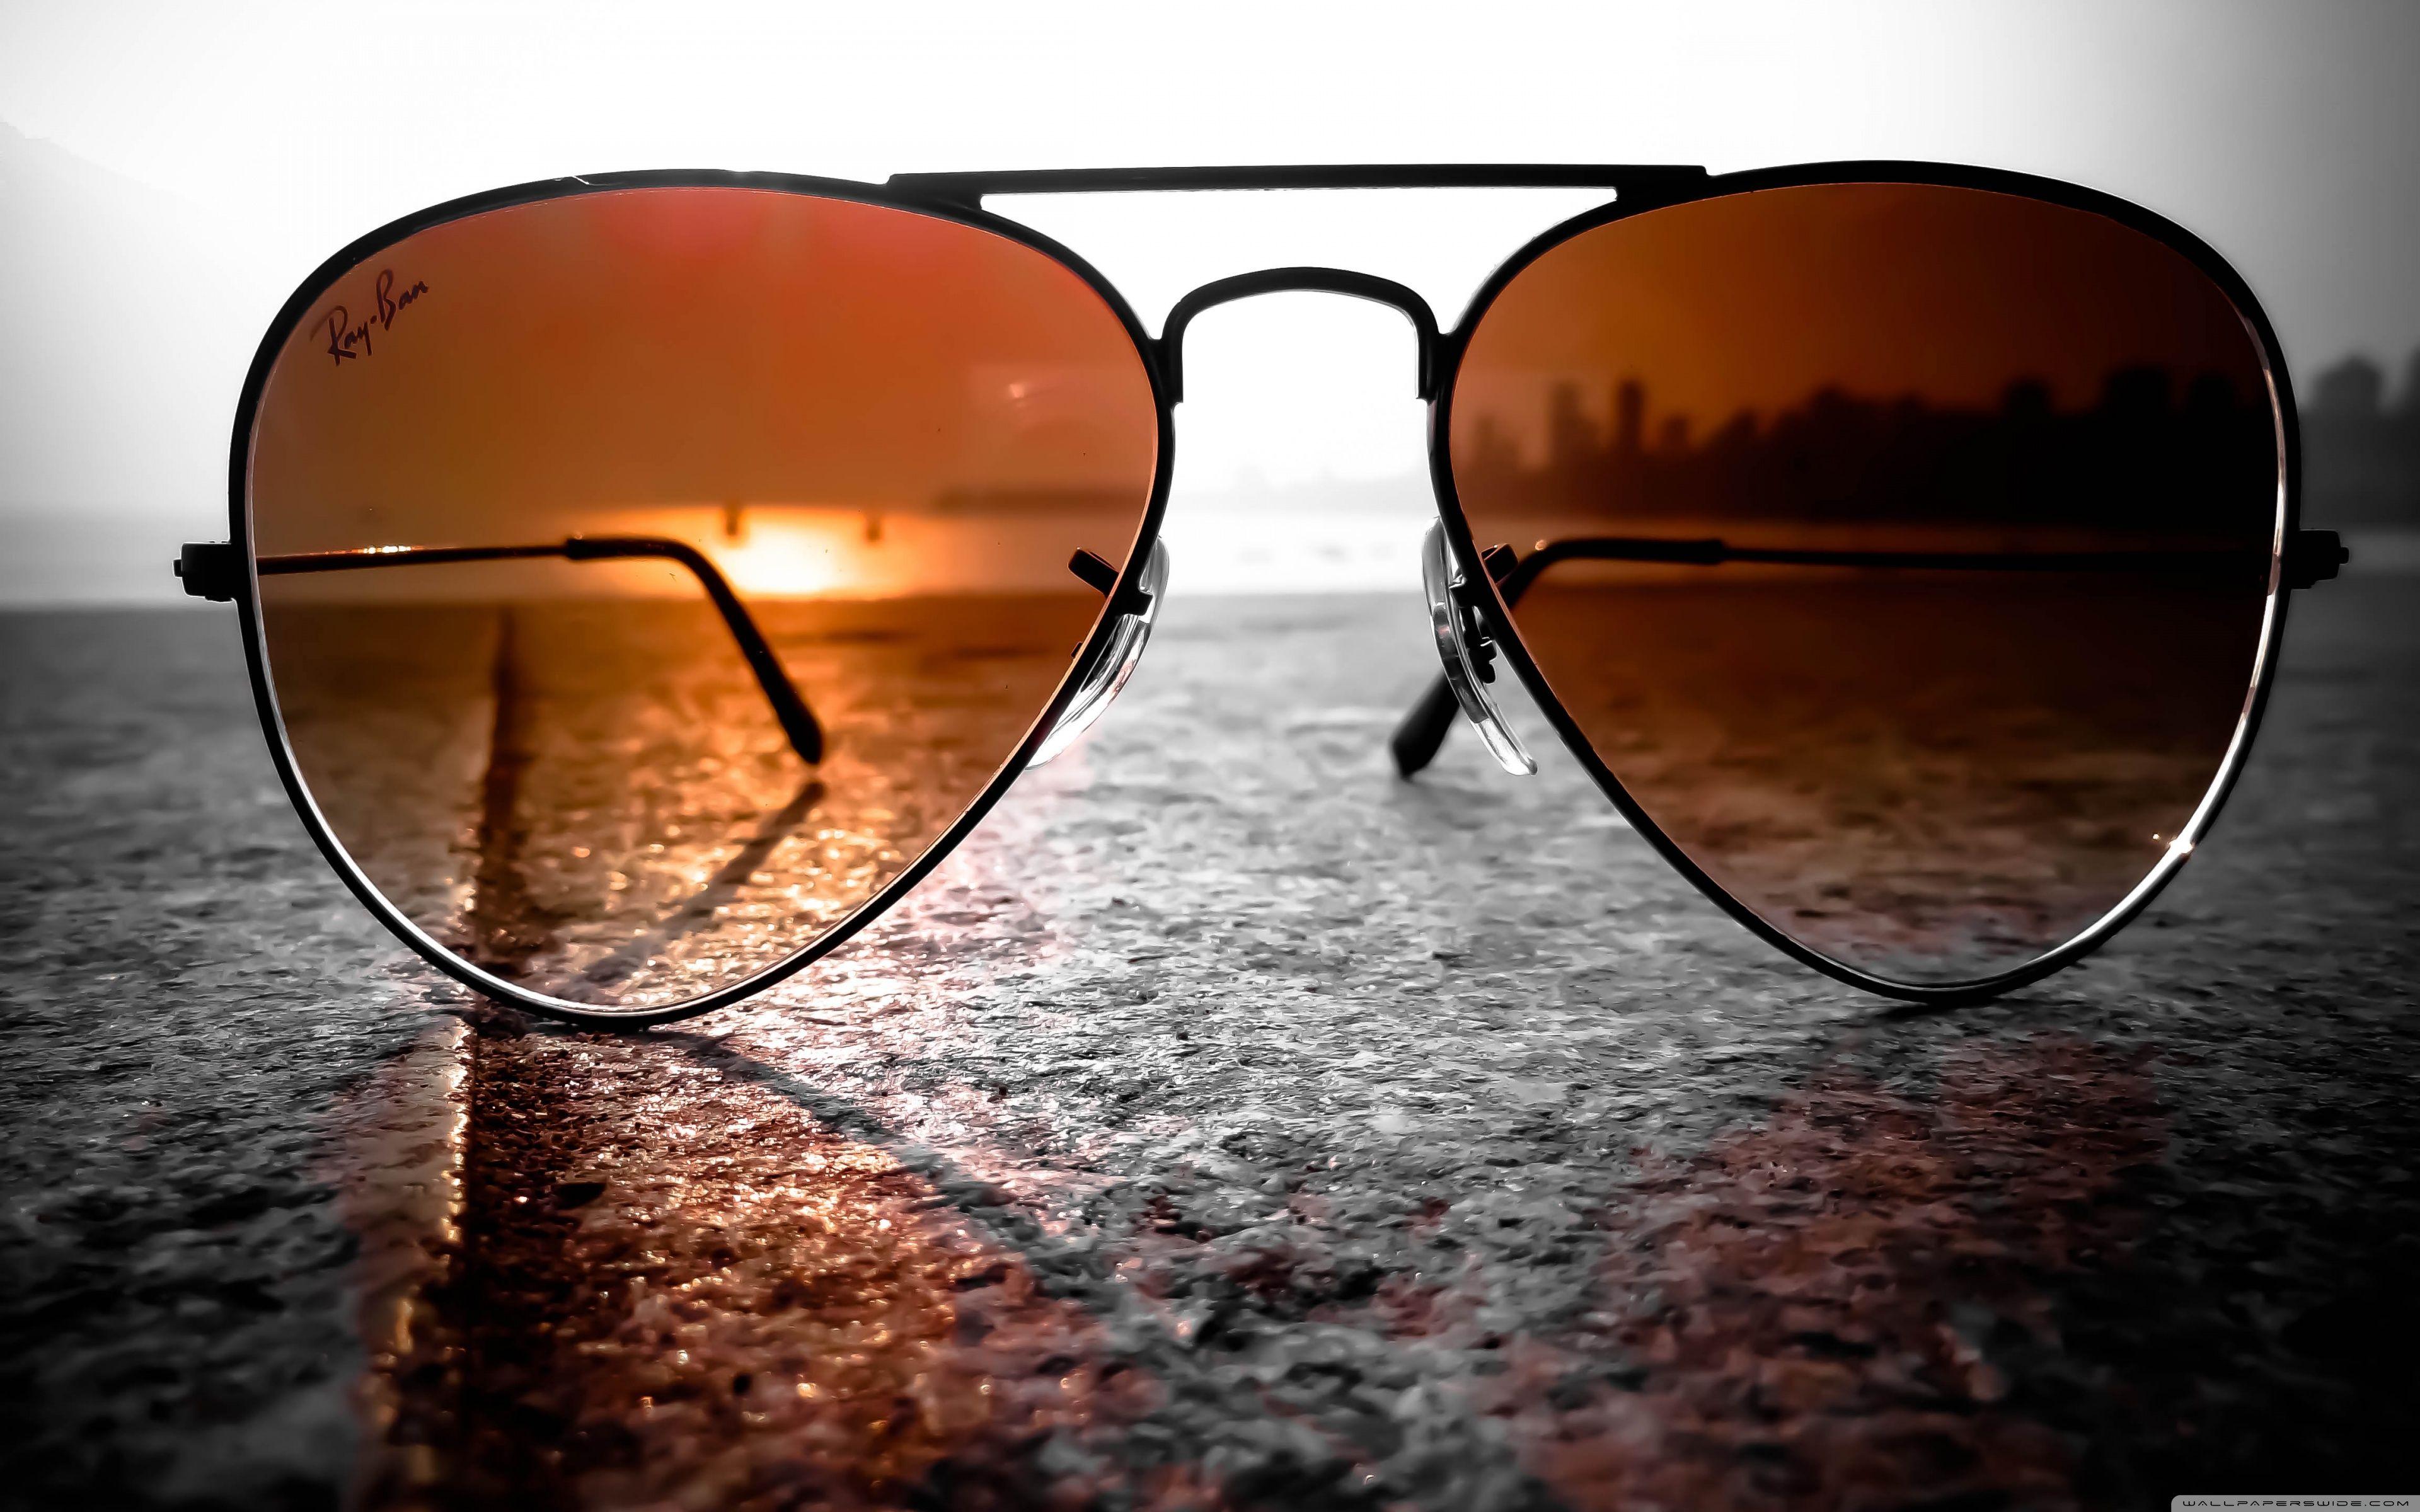 Sunglasses HD Wallpapers - Wallpaper Cave